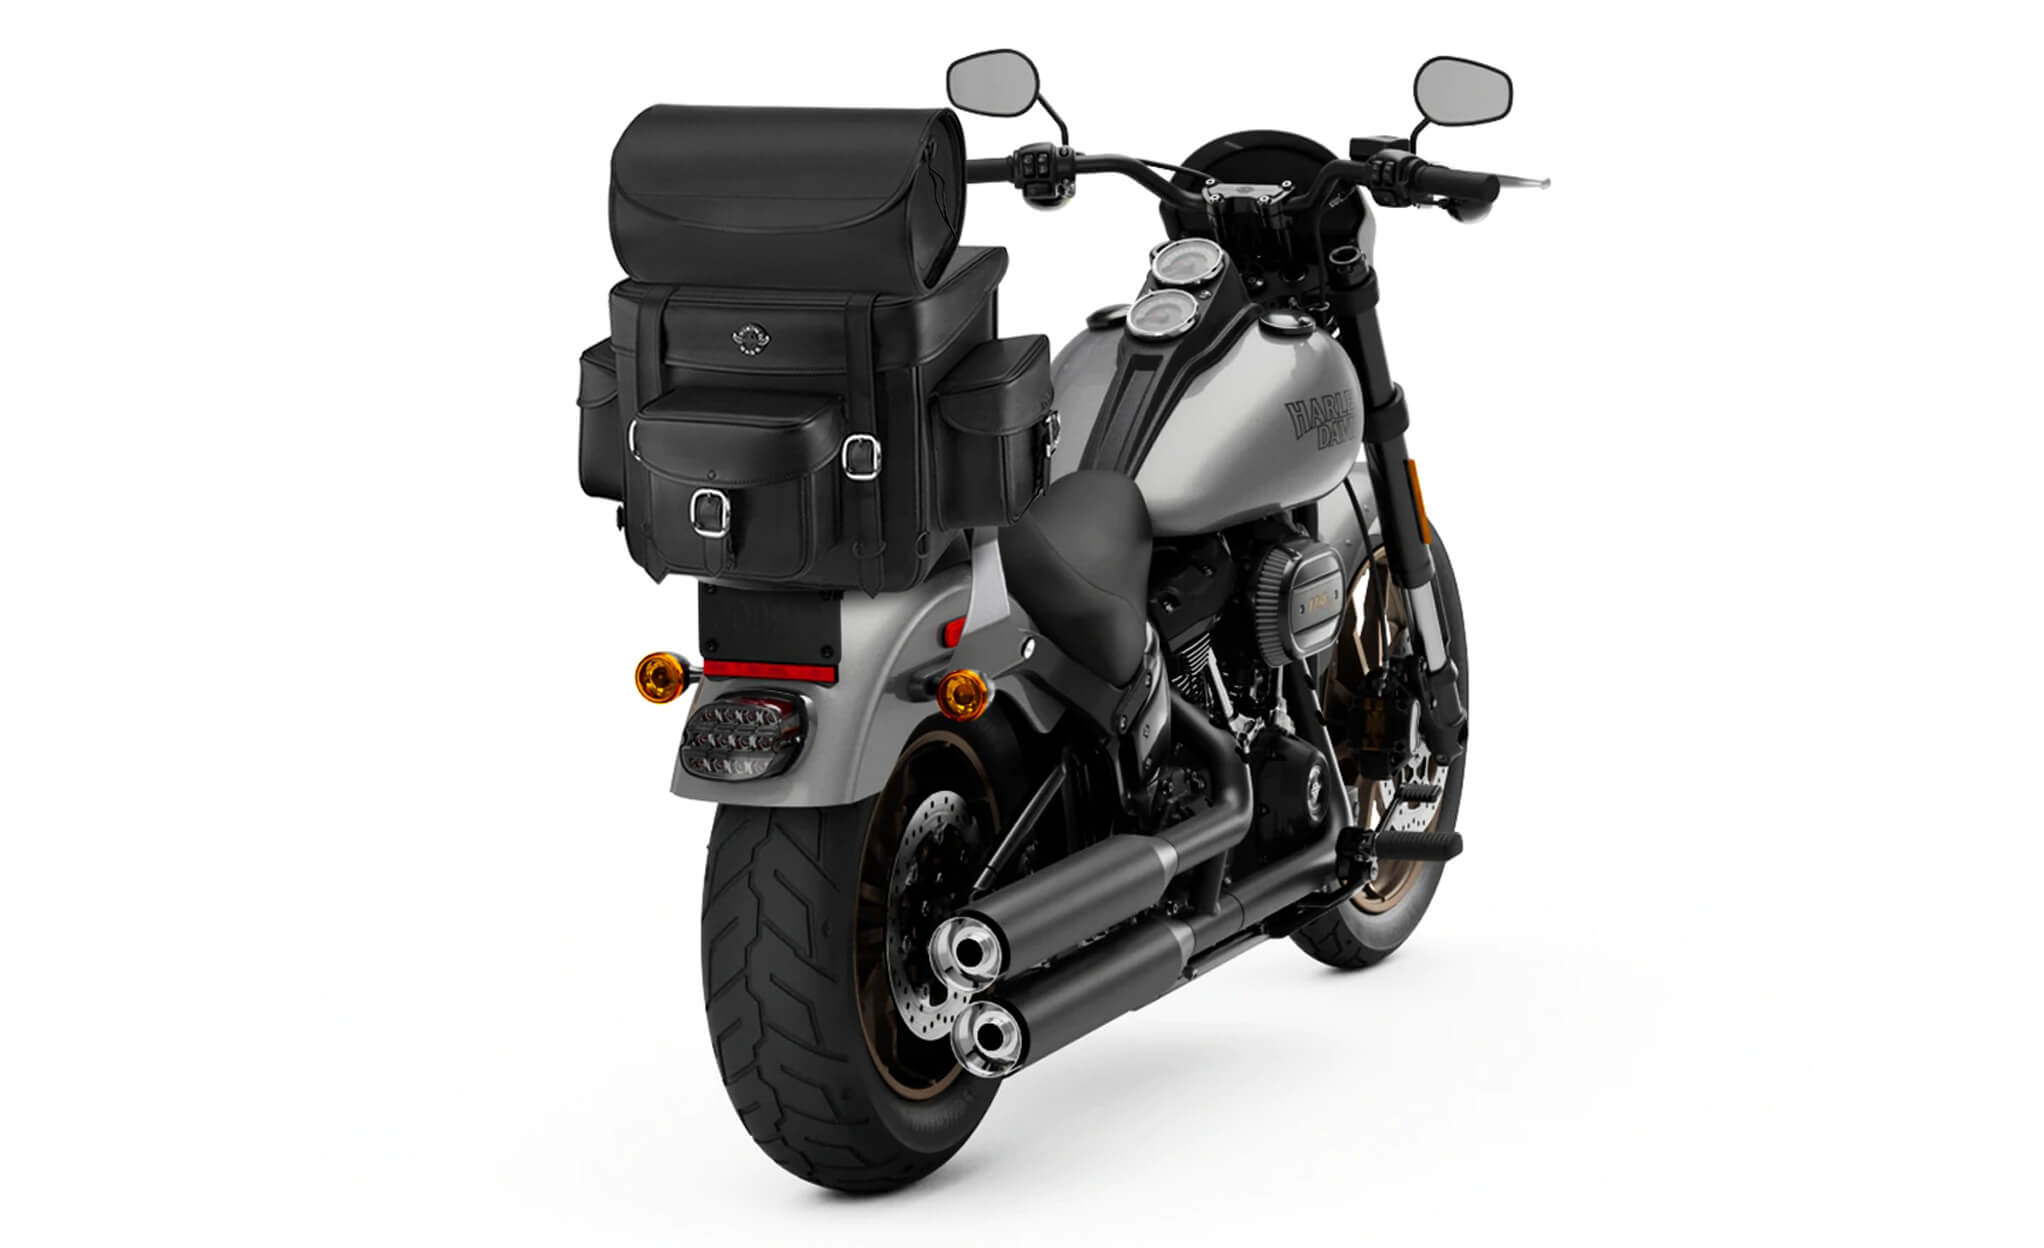 Viking Revival Series Large Motorcycle Sissy Bar Bag for Harley Davidson Bag on Bike View @expand